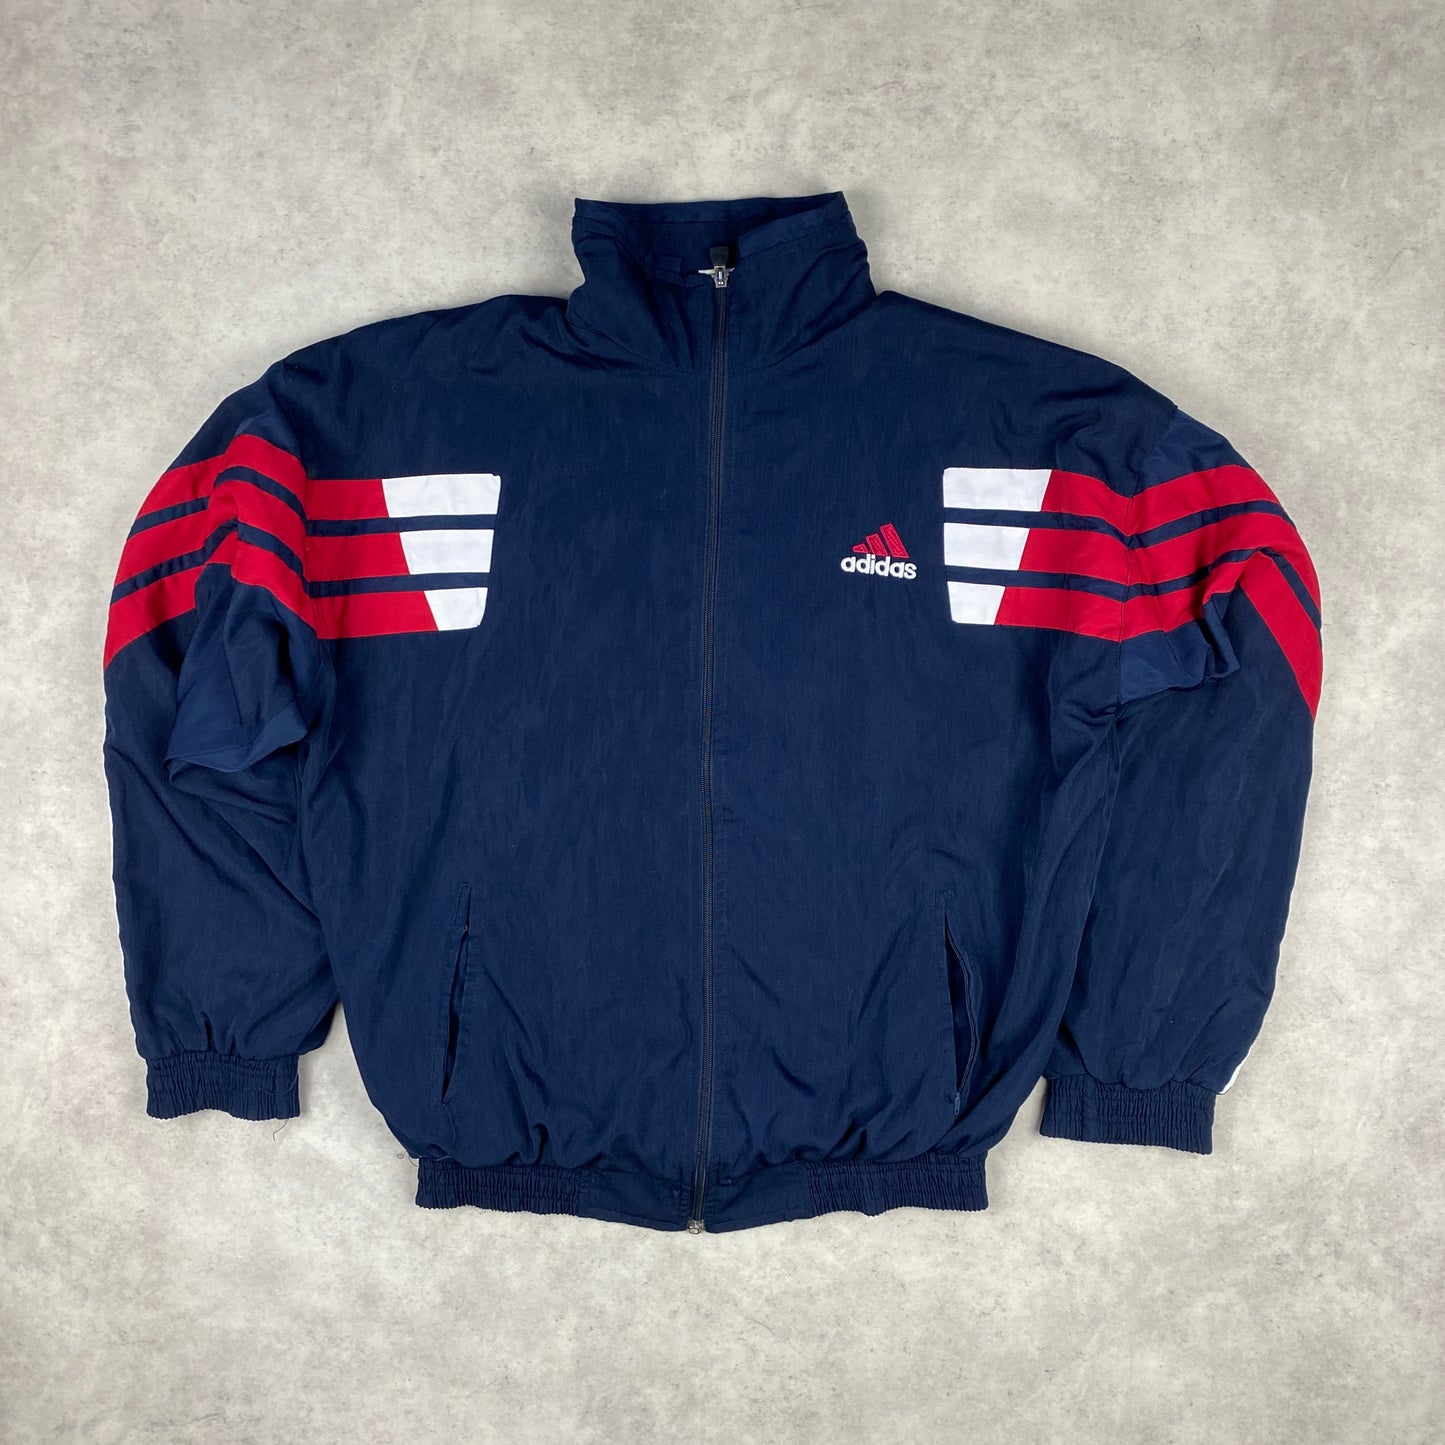 Adidas RARE track jacket (L)  (